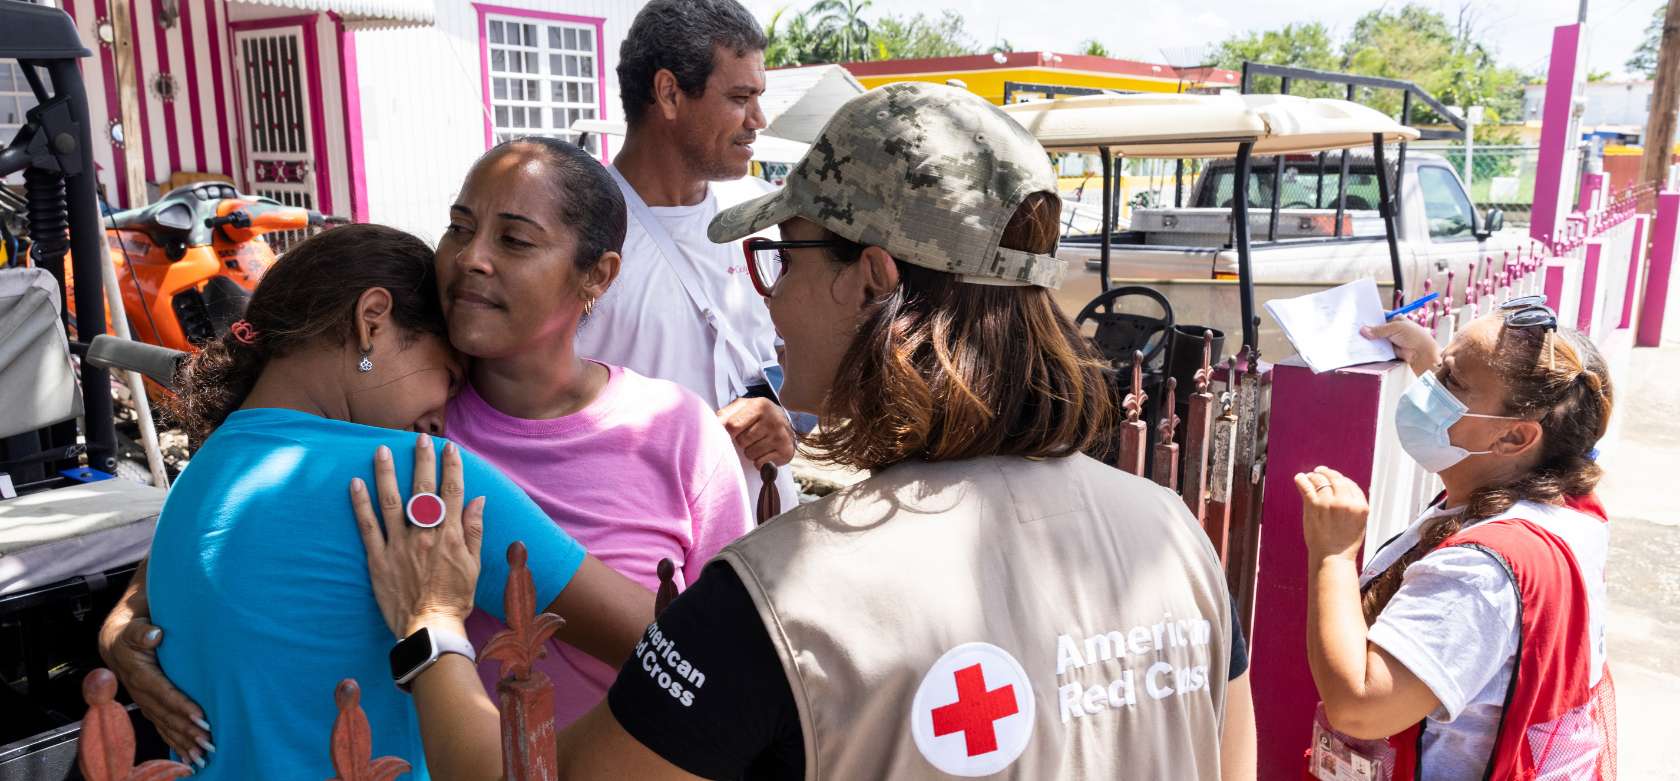 Red cross members helping community